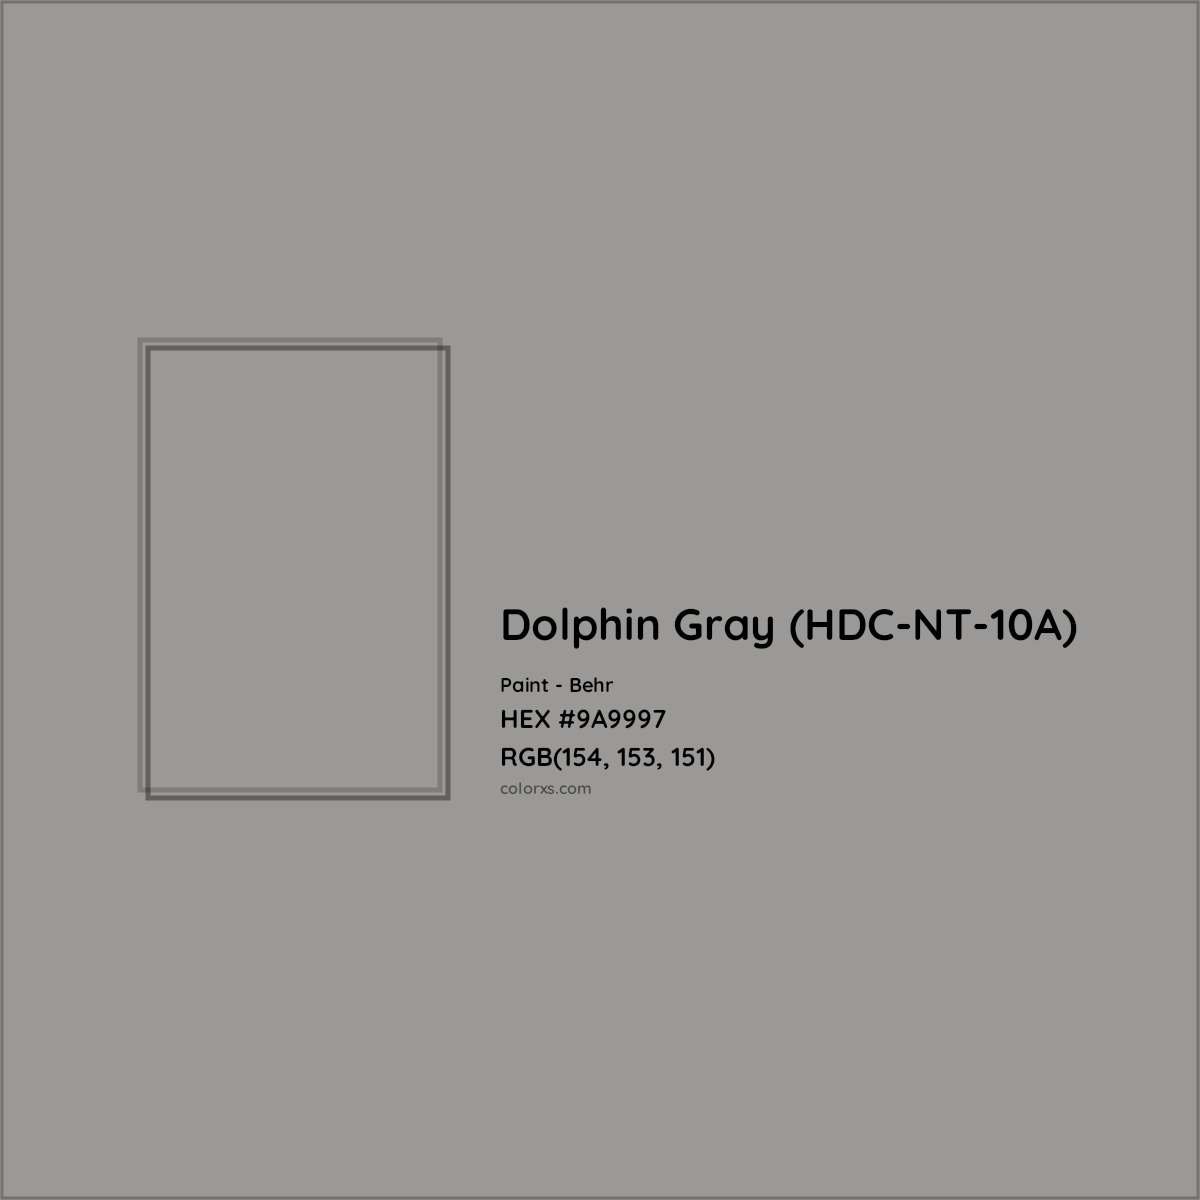 behr dolphin gray living room